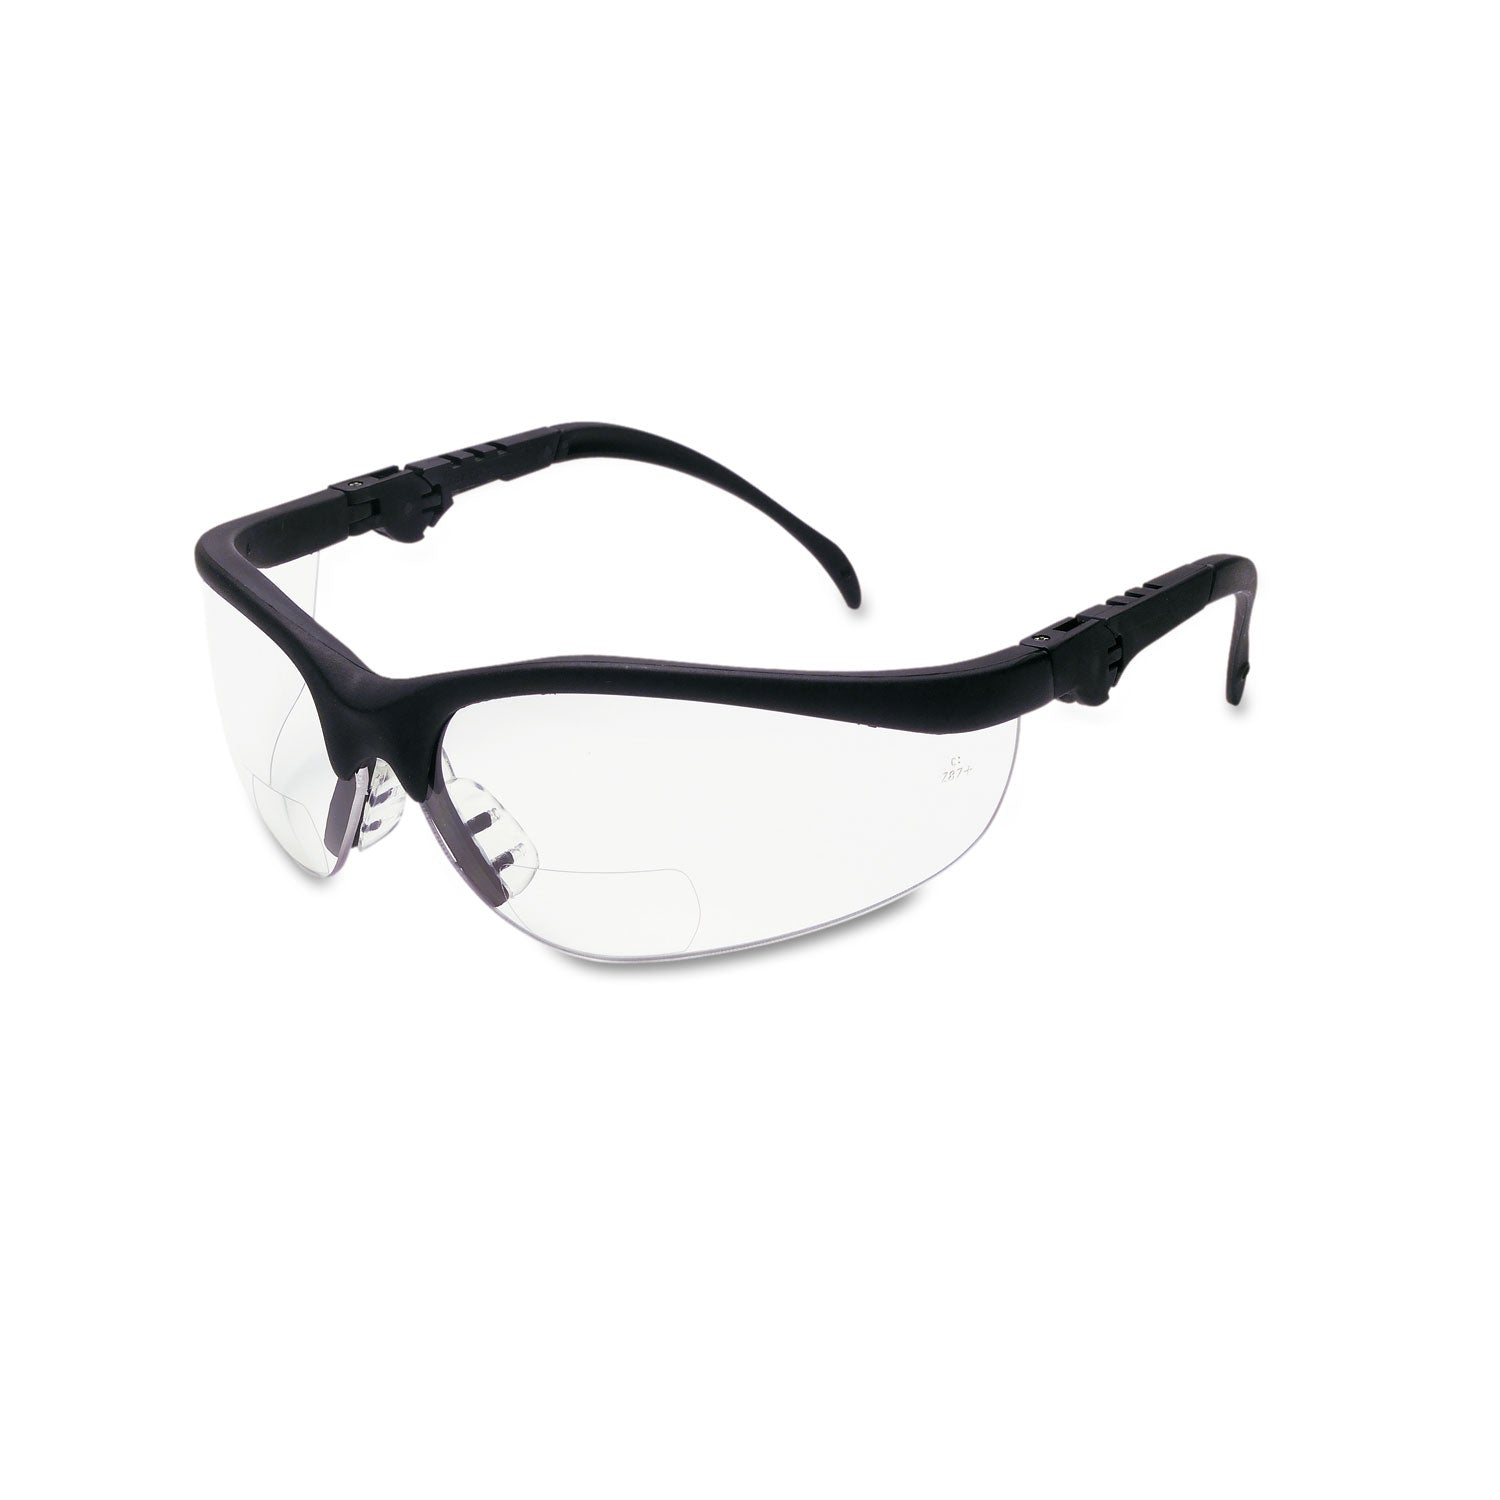 Klondike Magnifier Glasses, 1.5 Magnifier, Clear Lens - 